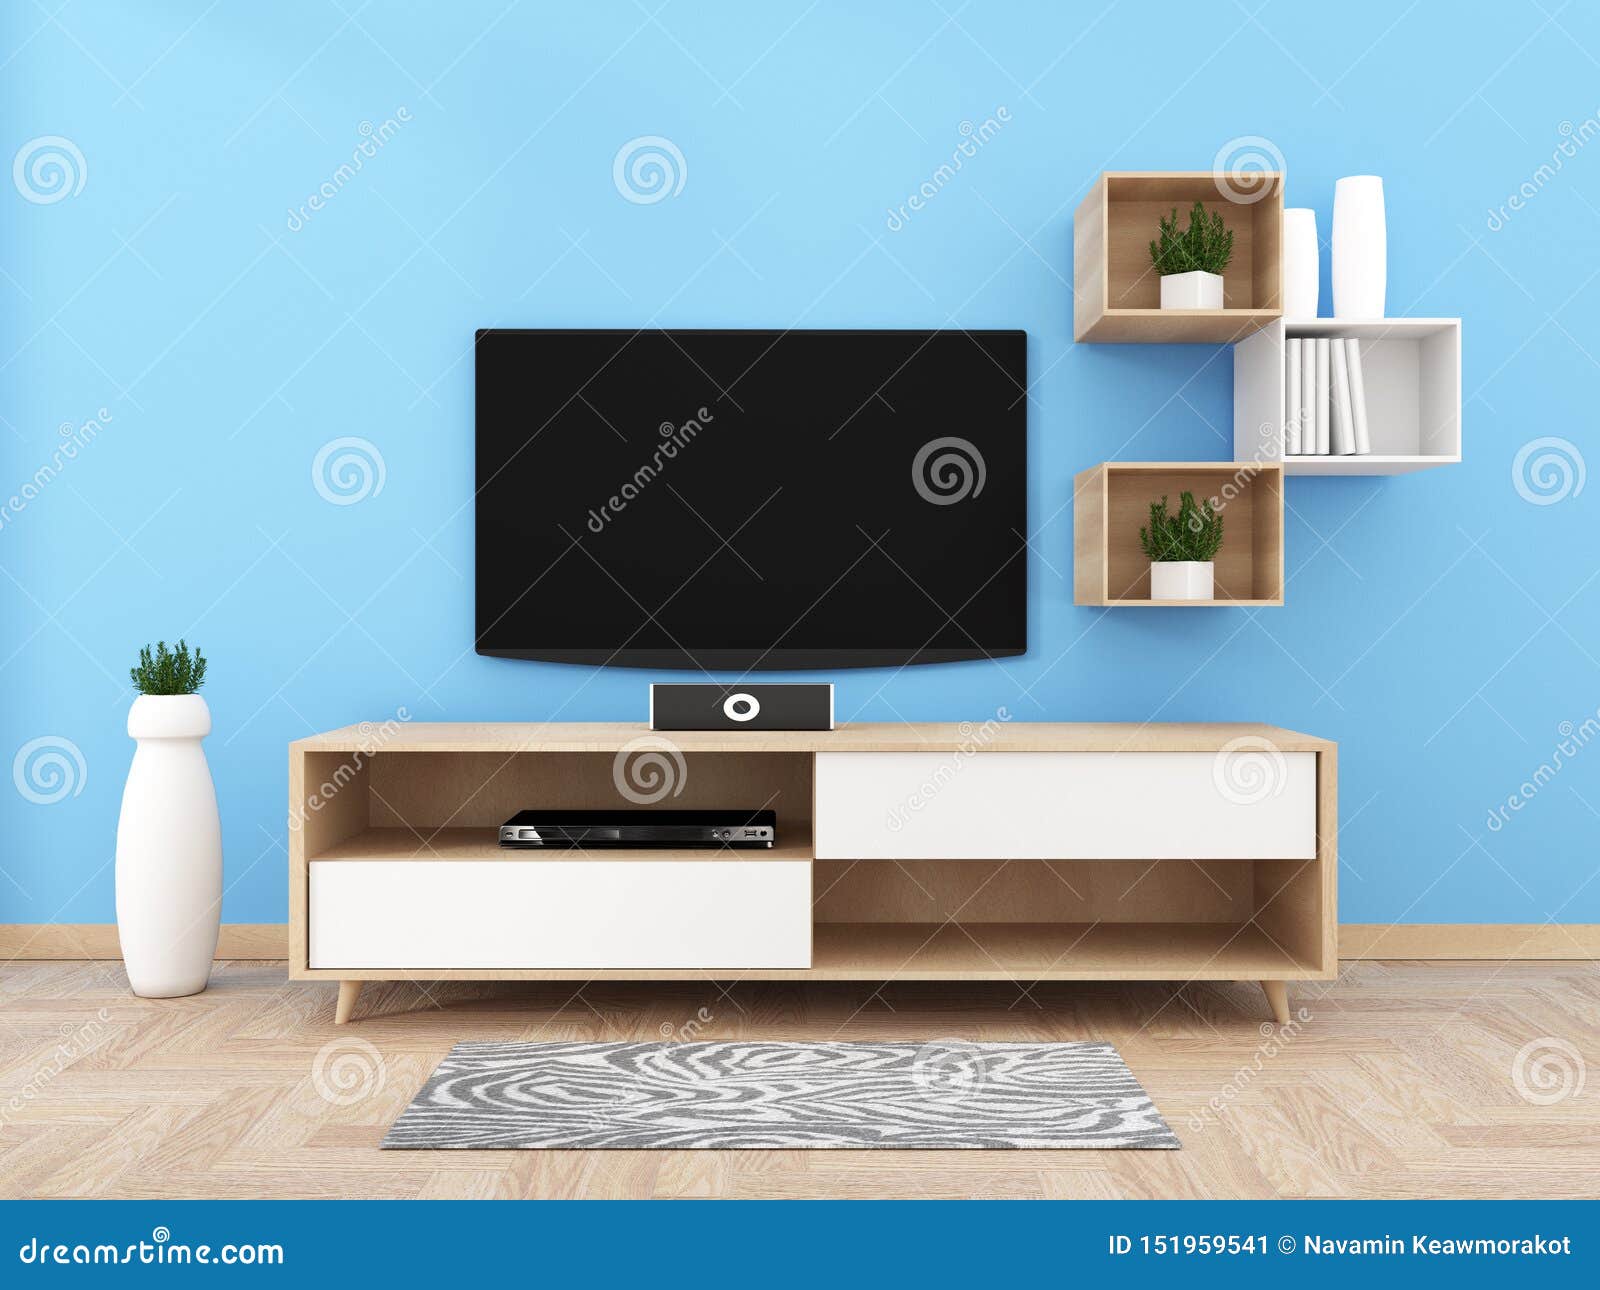 Smart Tv With Blank Black Screen Hanging On Cabinet Design Modern